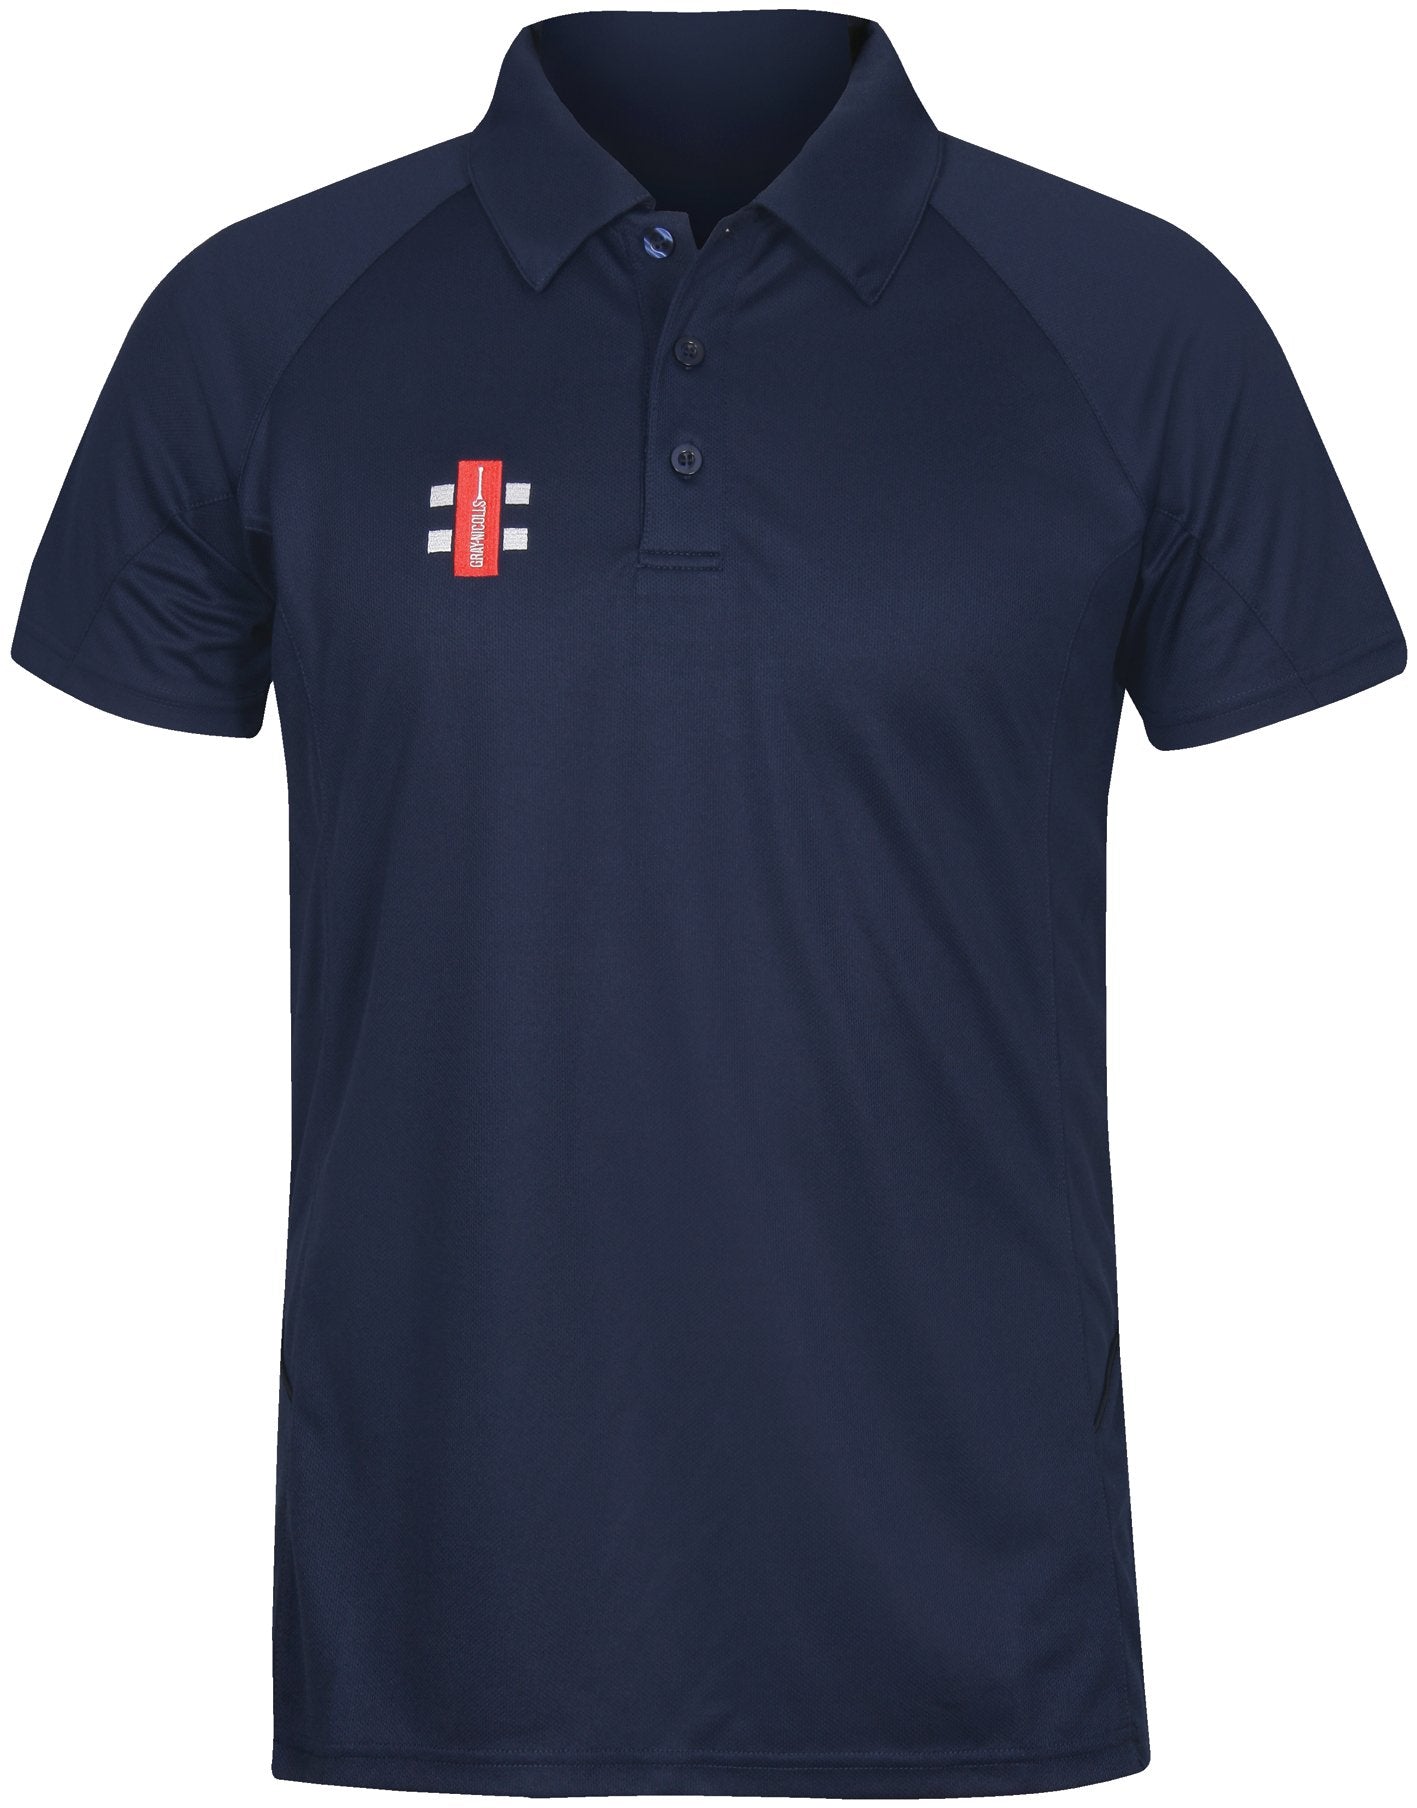 CCFC14LeisureShirts Matrix Polo Shirt Navy